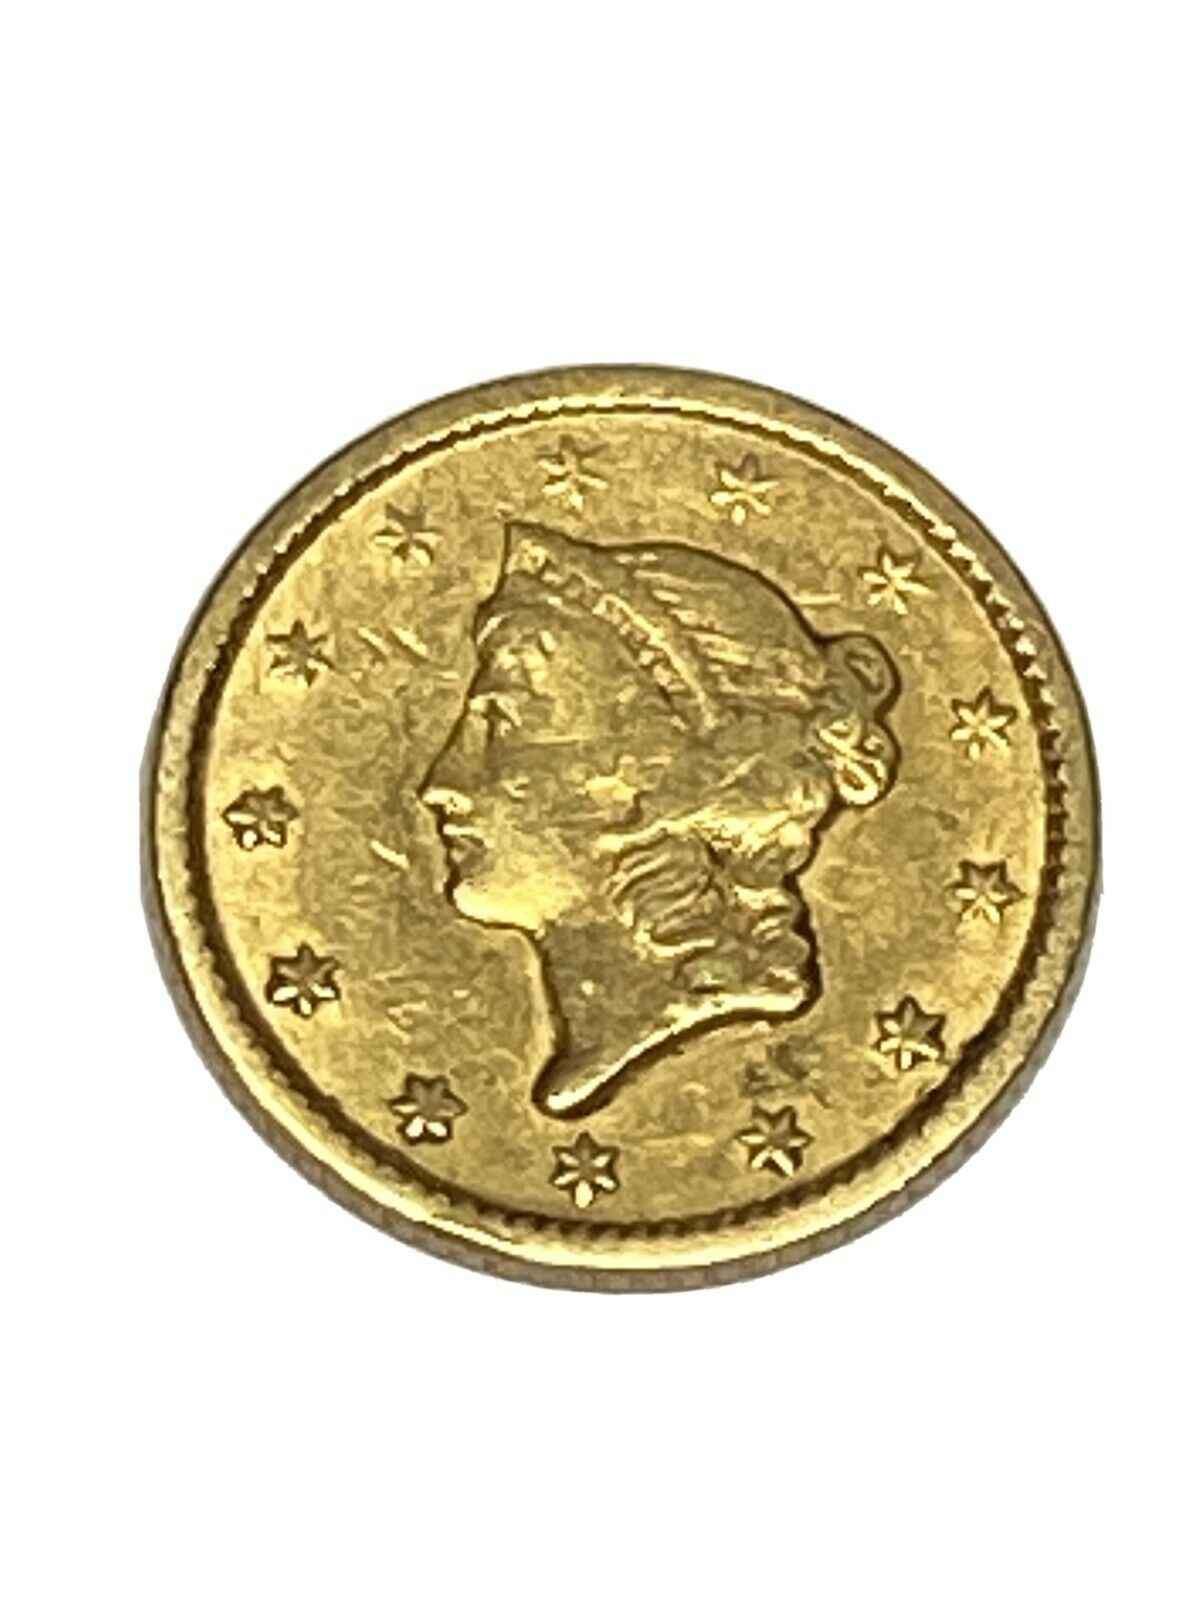 1851 $1 Liberty Head Gold One Dollar